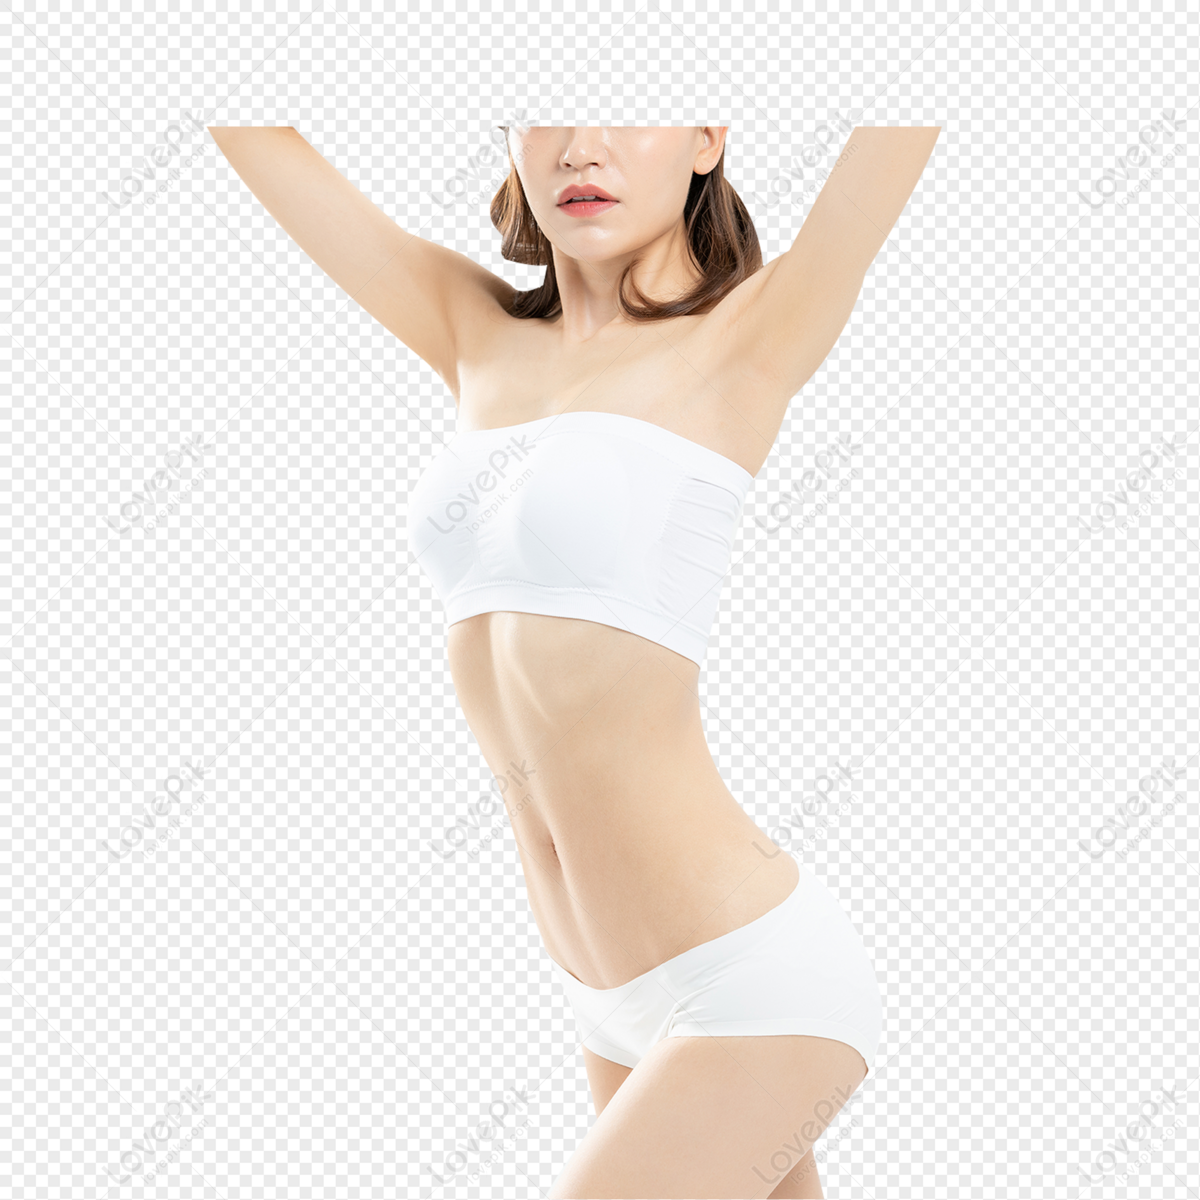 Slim Body PNG Transparent Images Free Download